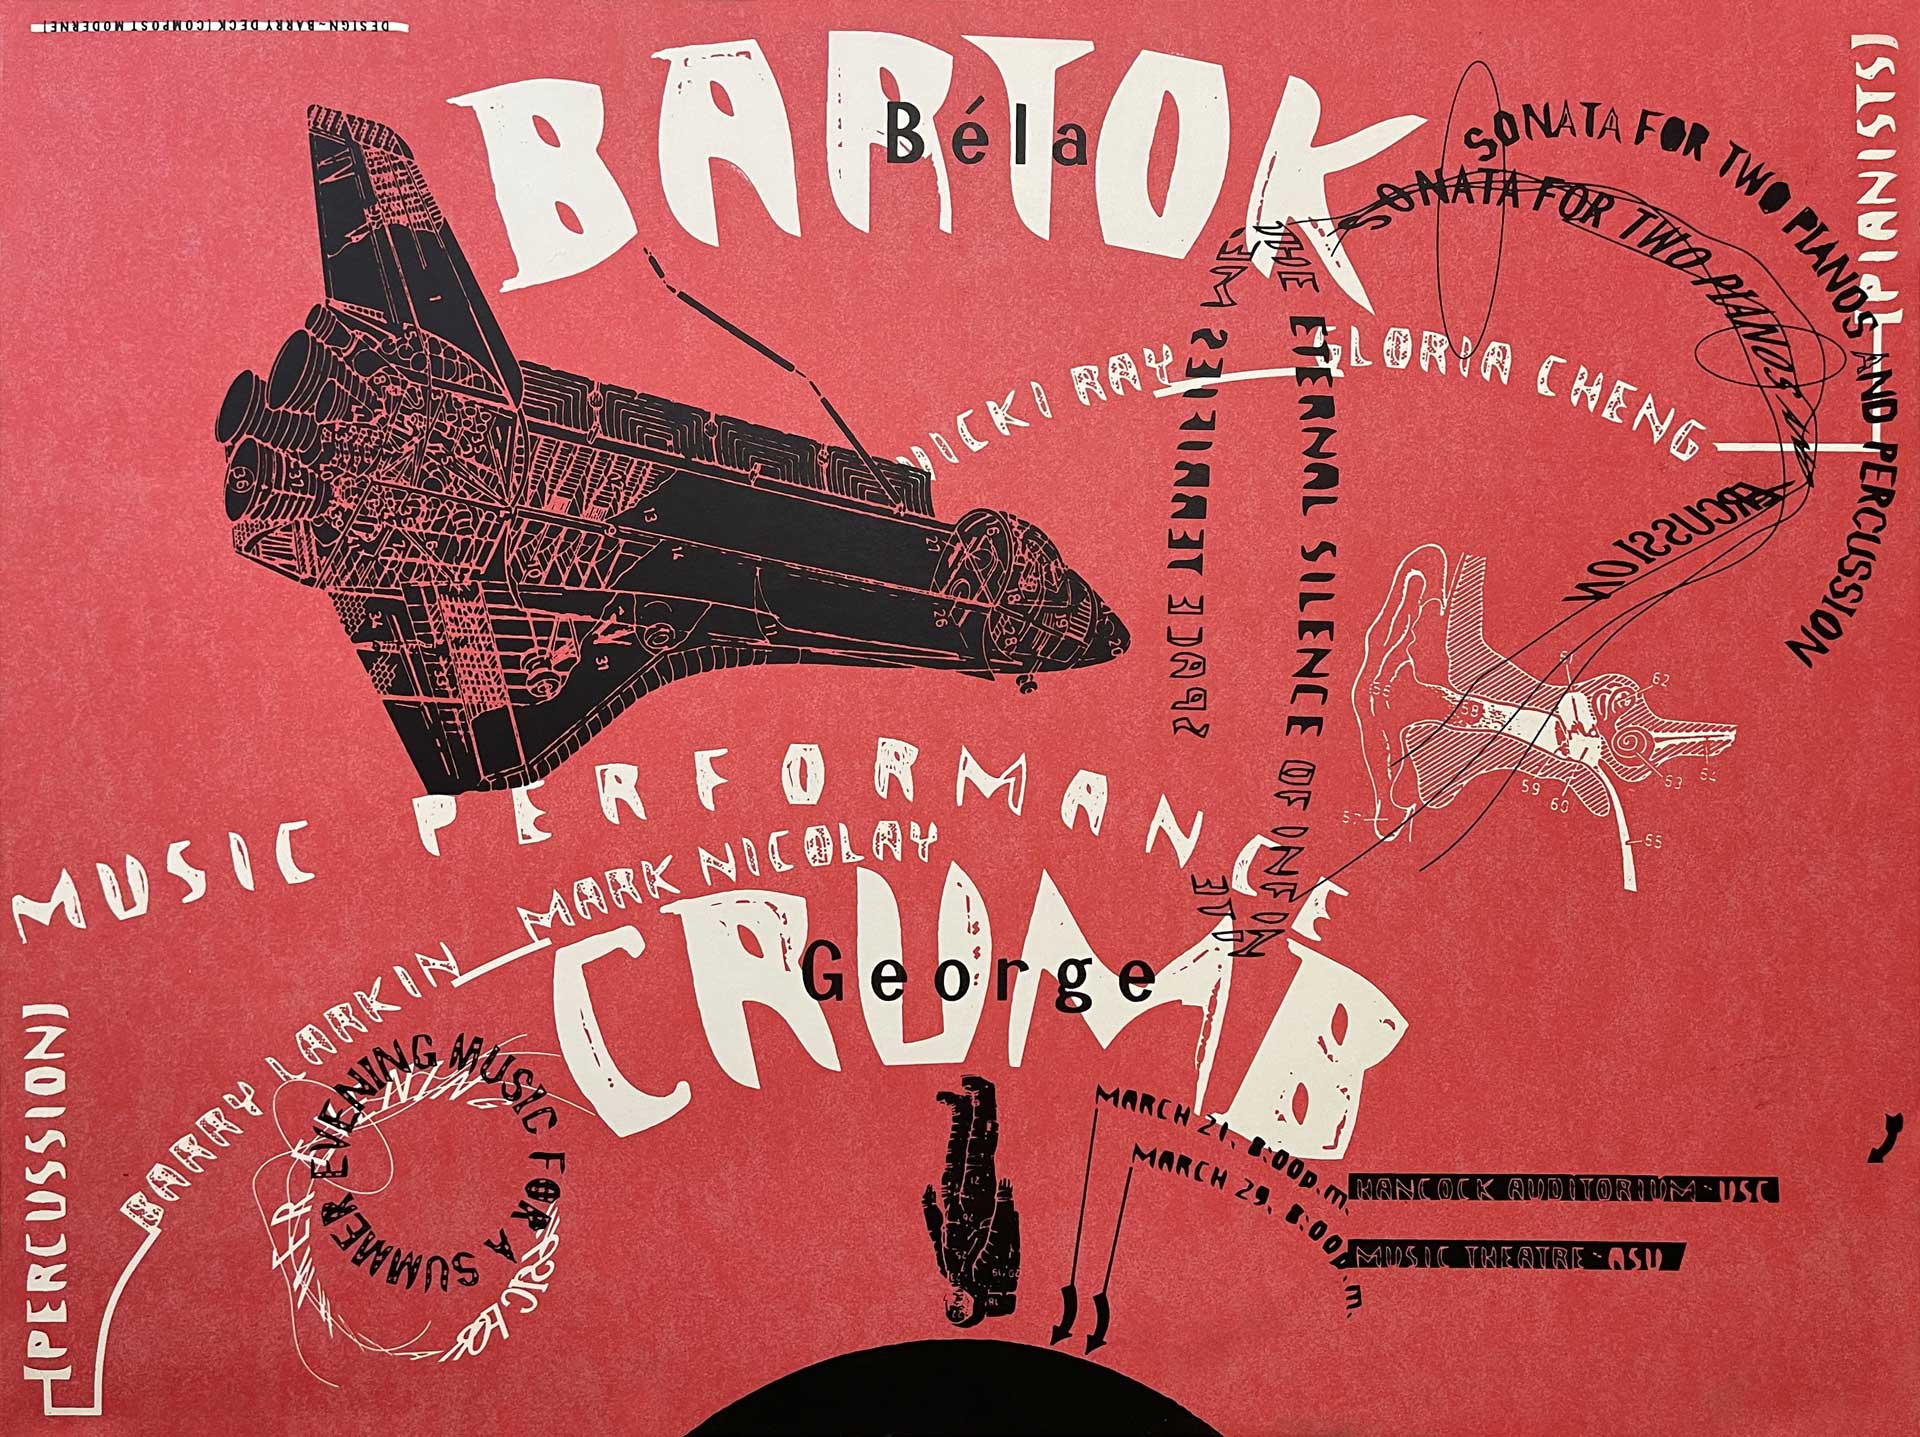 Bartok-Crumb Recital Poster, 1988, designed by Barry Deck